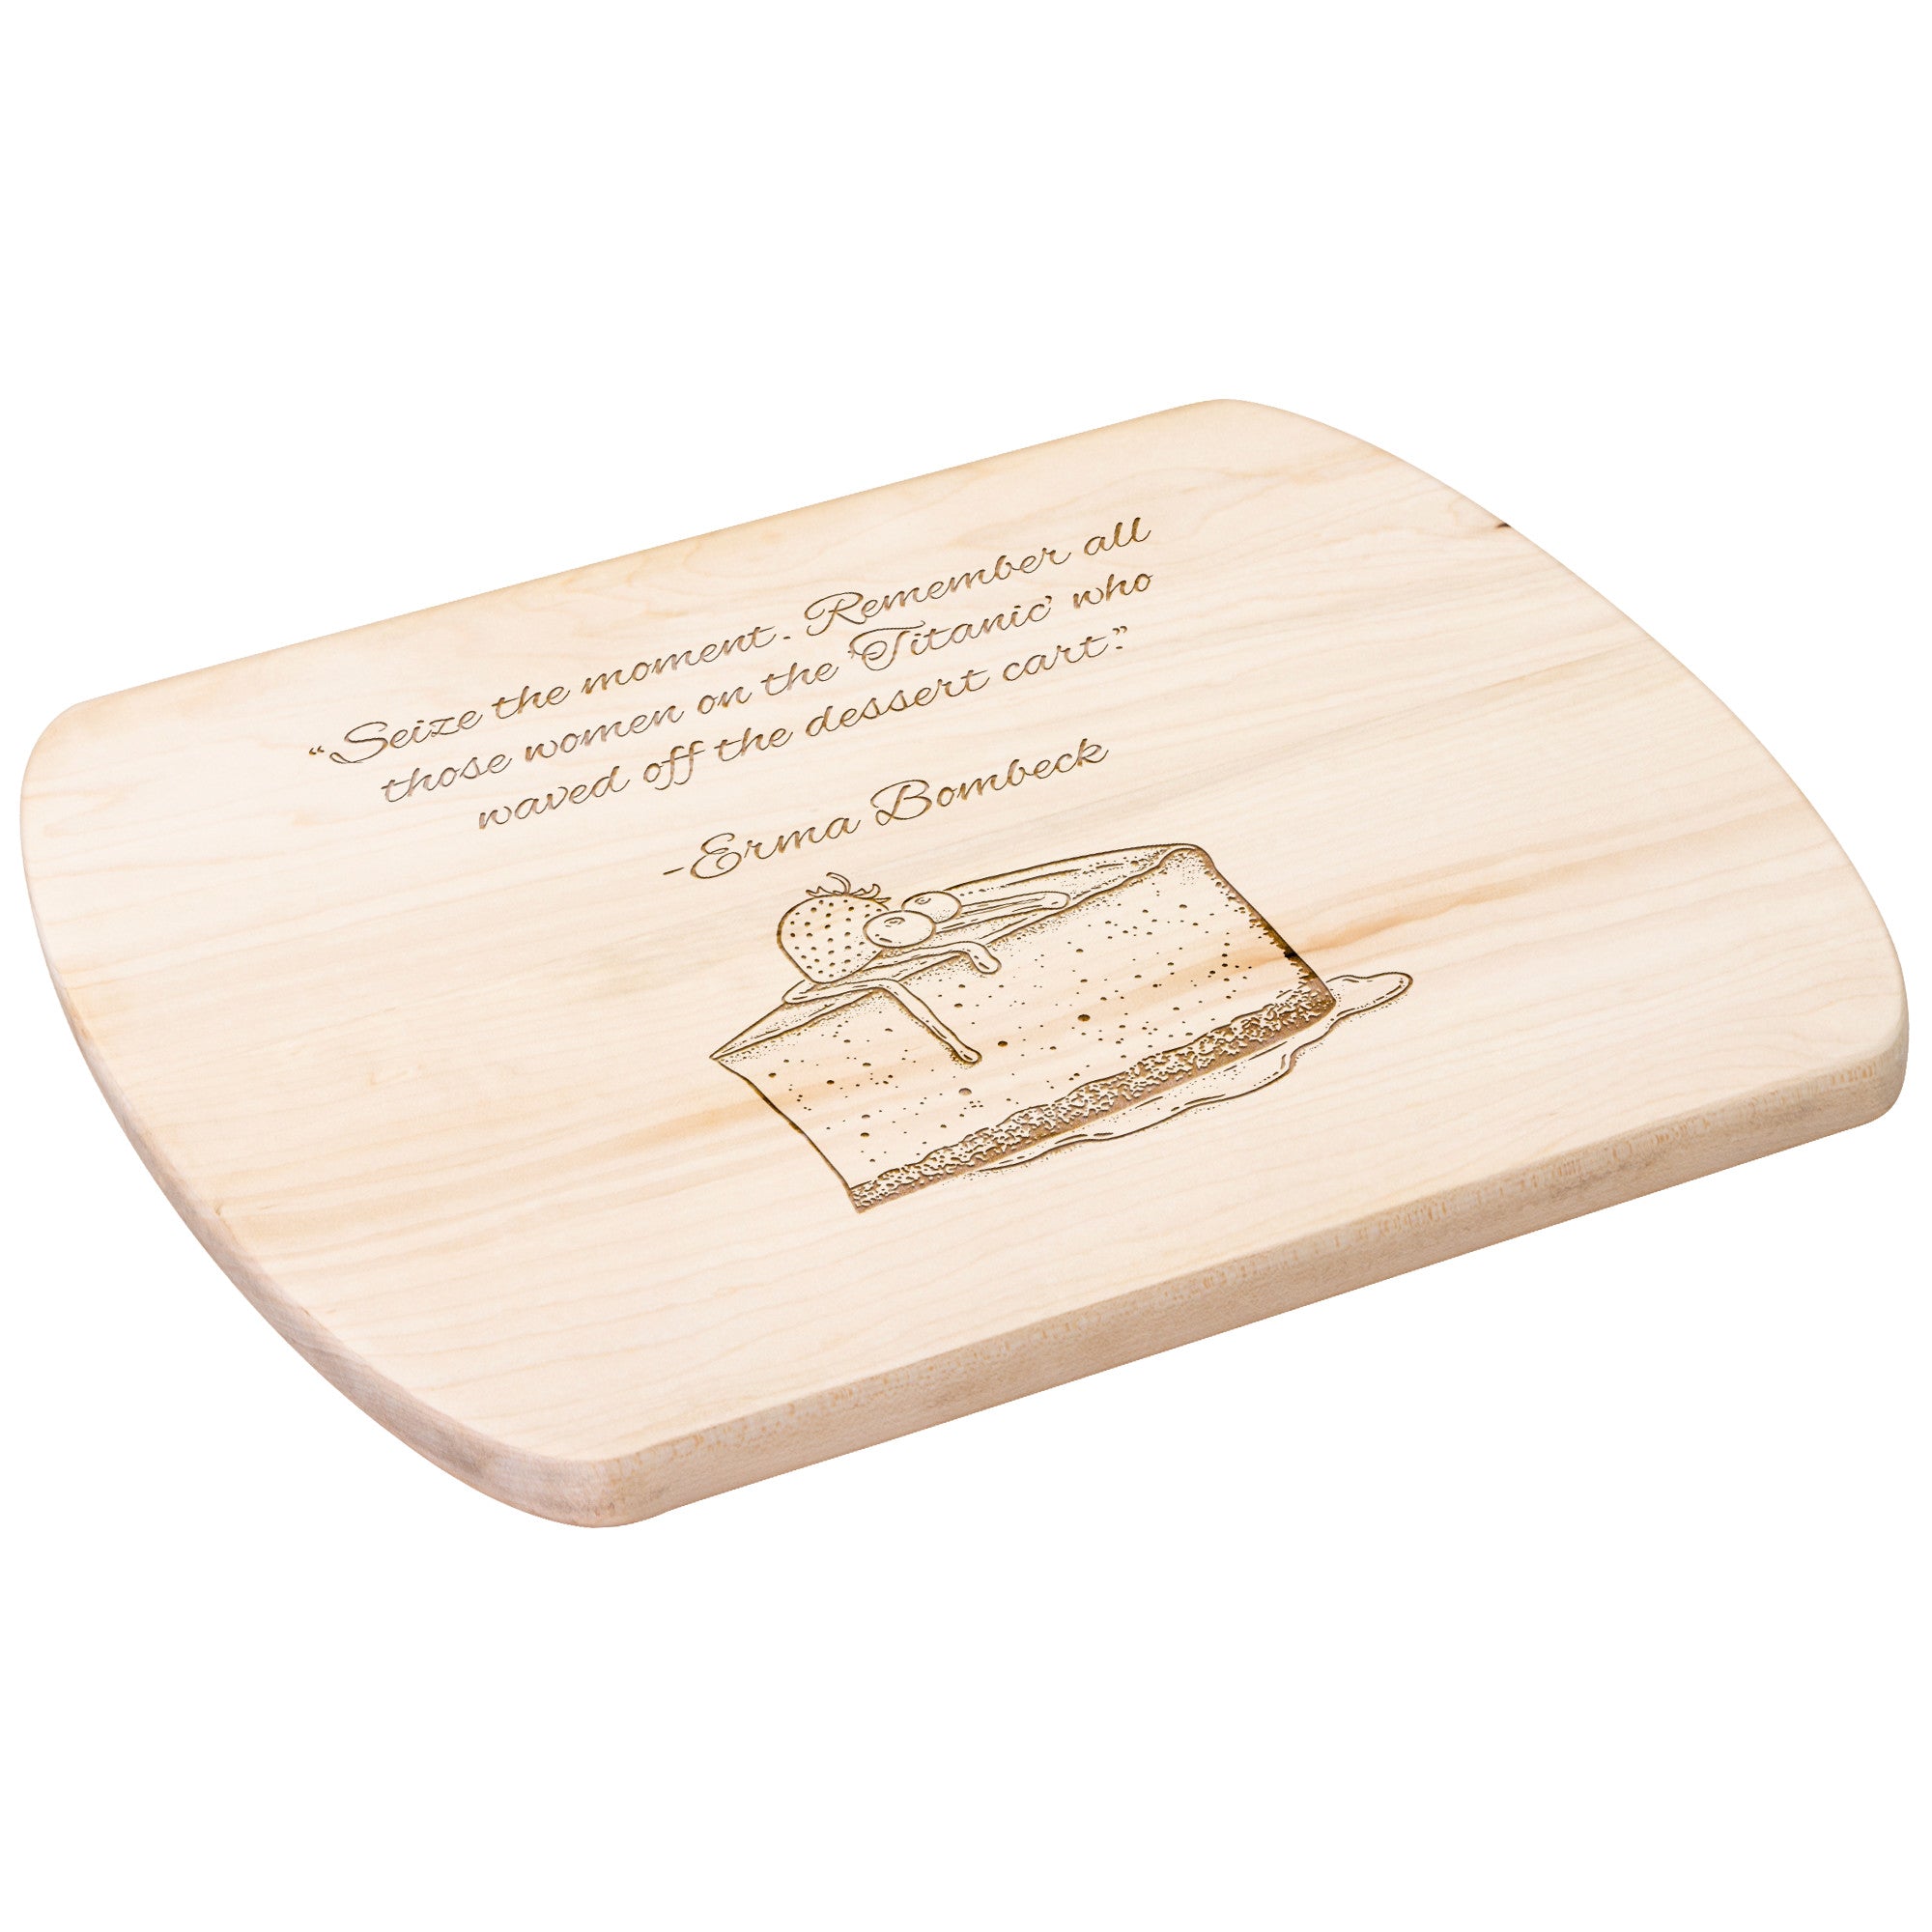 Hardwood Oval Cutting Board - Variant 07